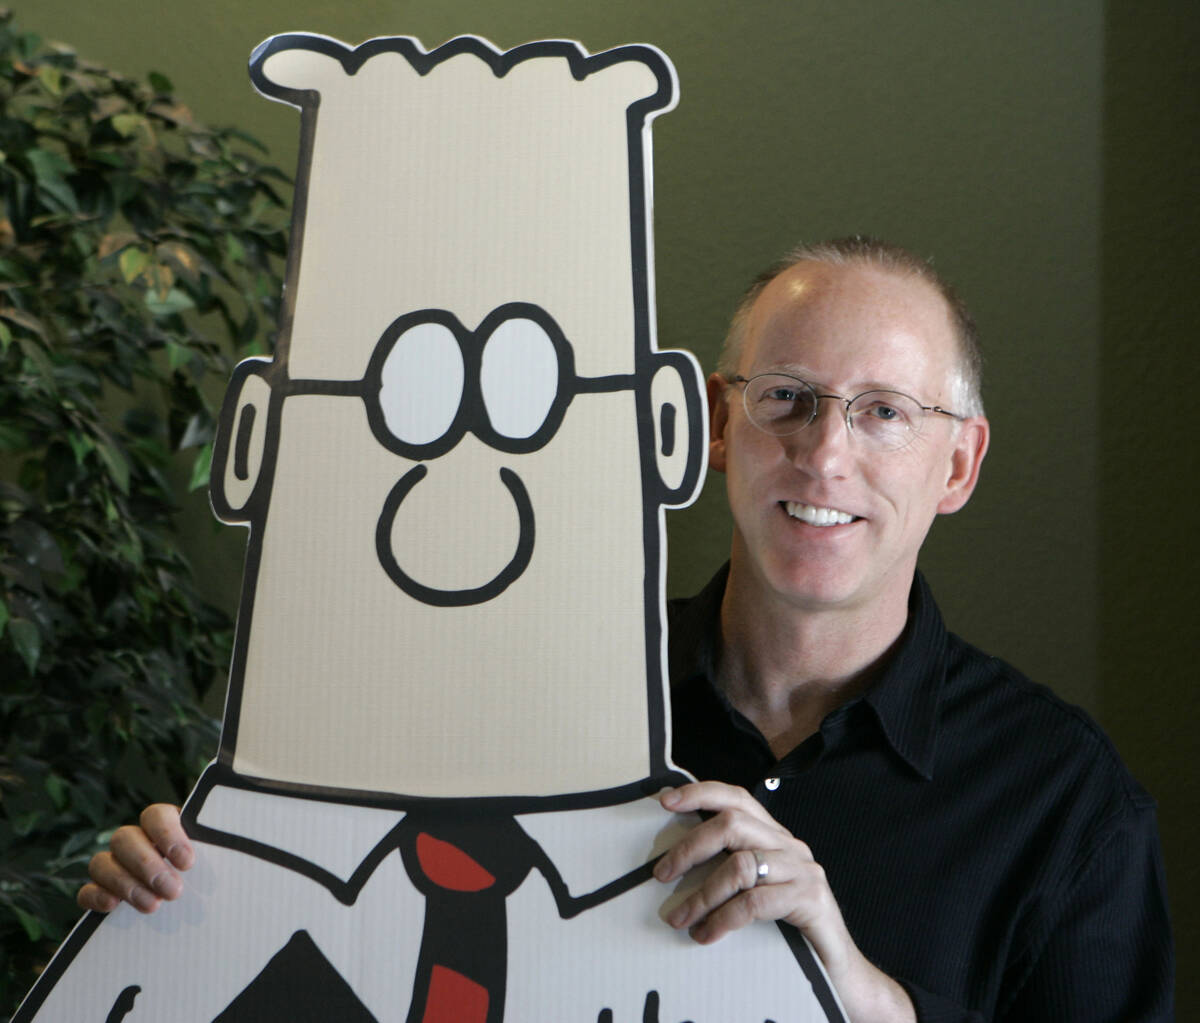 Kejatuhan artis ‘Dilbert’, disebabkan oleh komentar sembrono |  HALAMAN CLARENCE